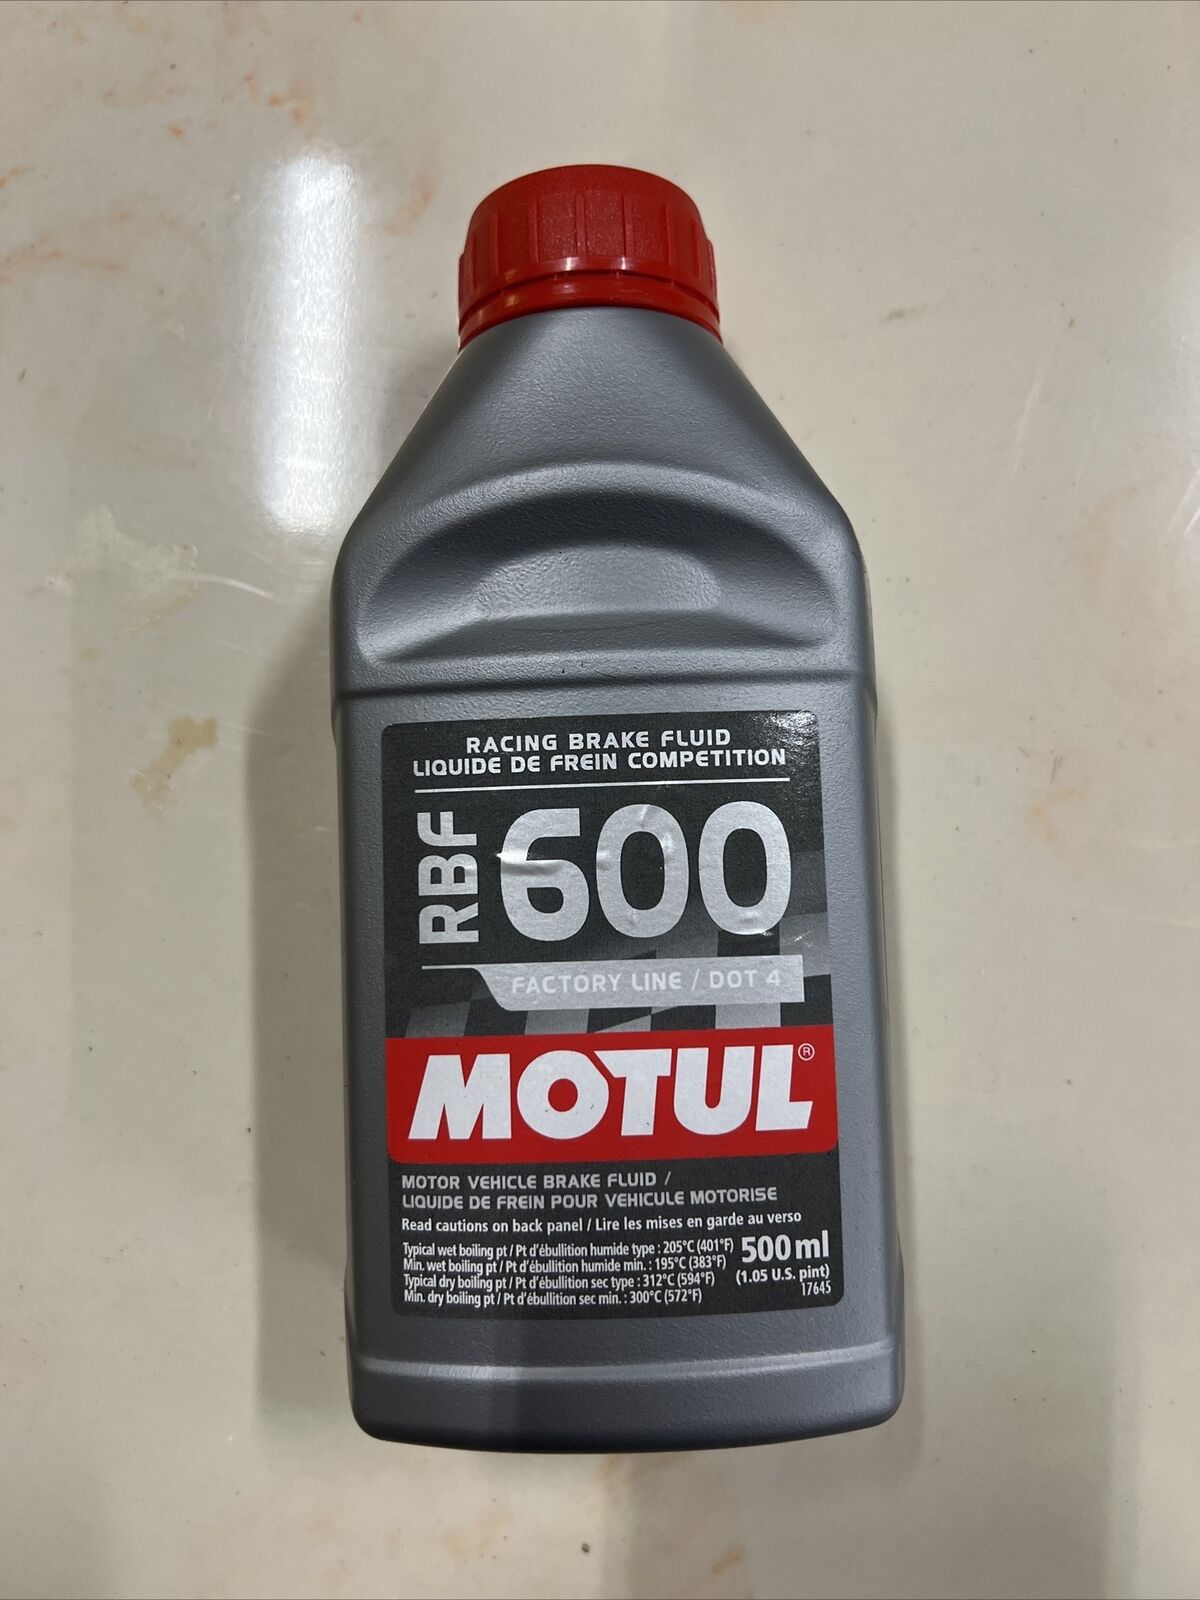 Motul RBF 600 FL / 0.5L AM / Fully Synthetic DOT 4 Racing Brake Fluid